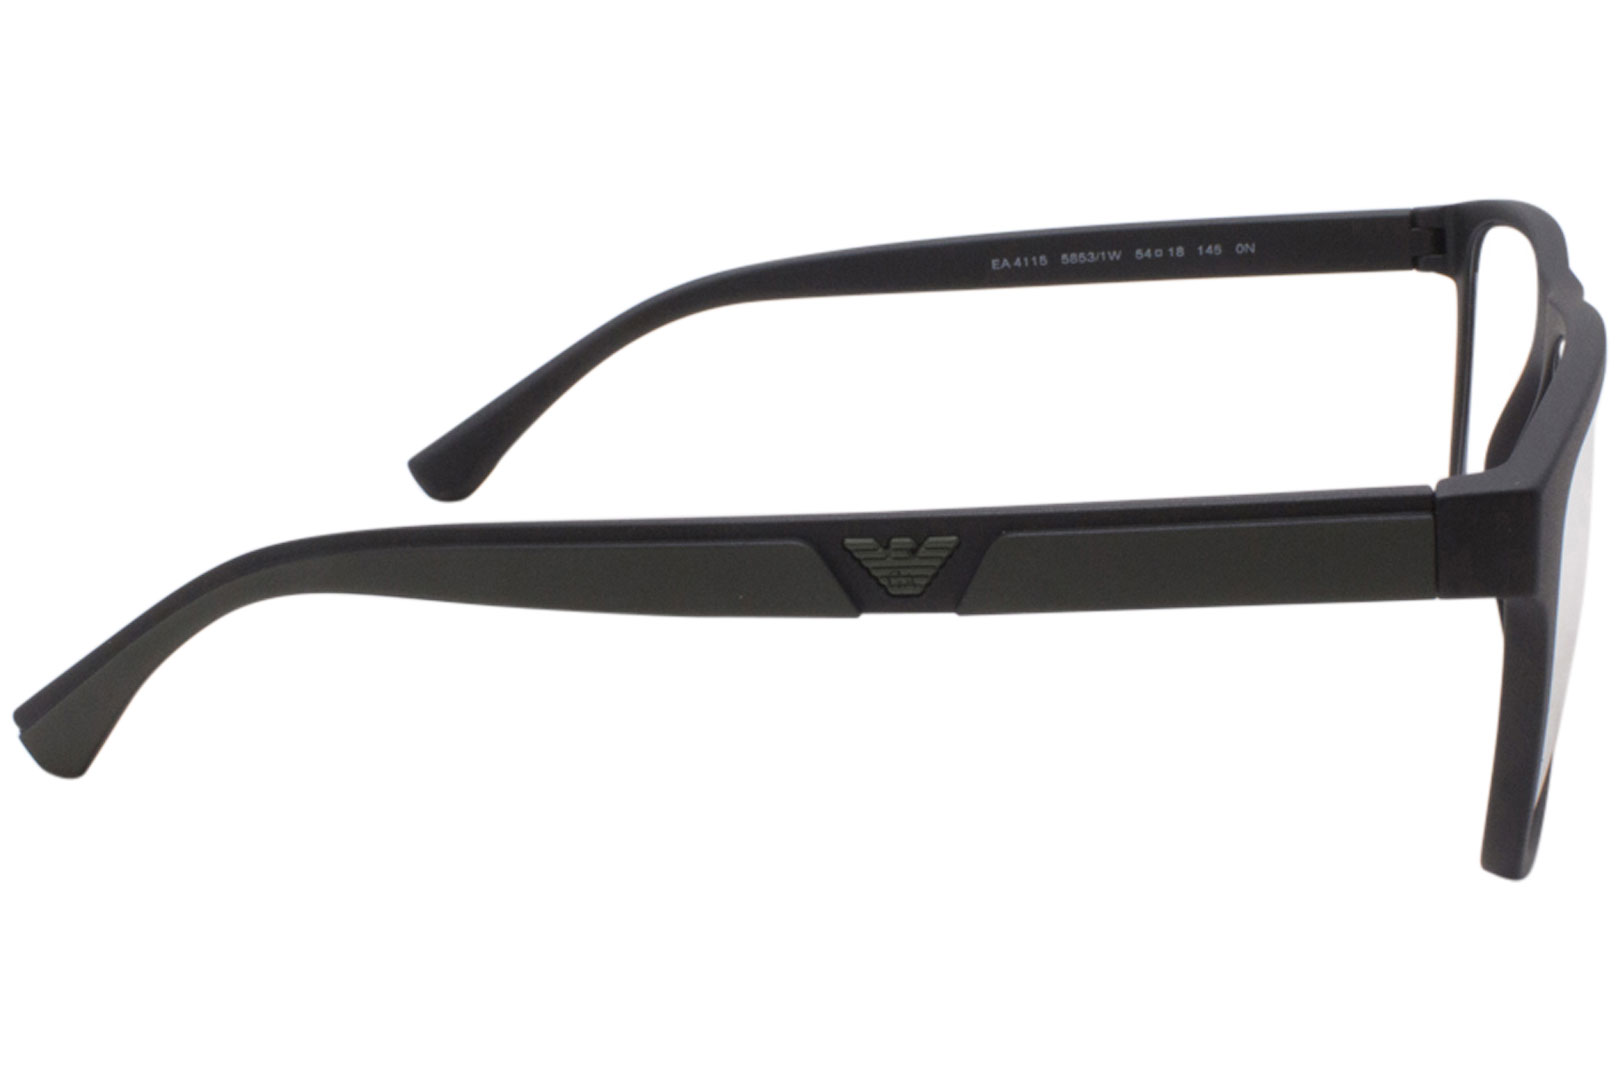 Giorgio Armani - Panto Glasses with Clip - Tortoiseshell Havana - Sunglasses  - Giorgio Armani Eyewear - Avvenice